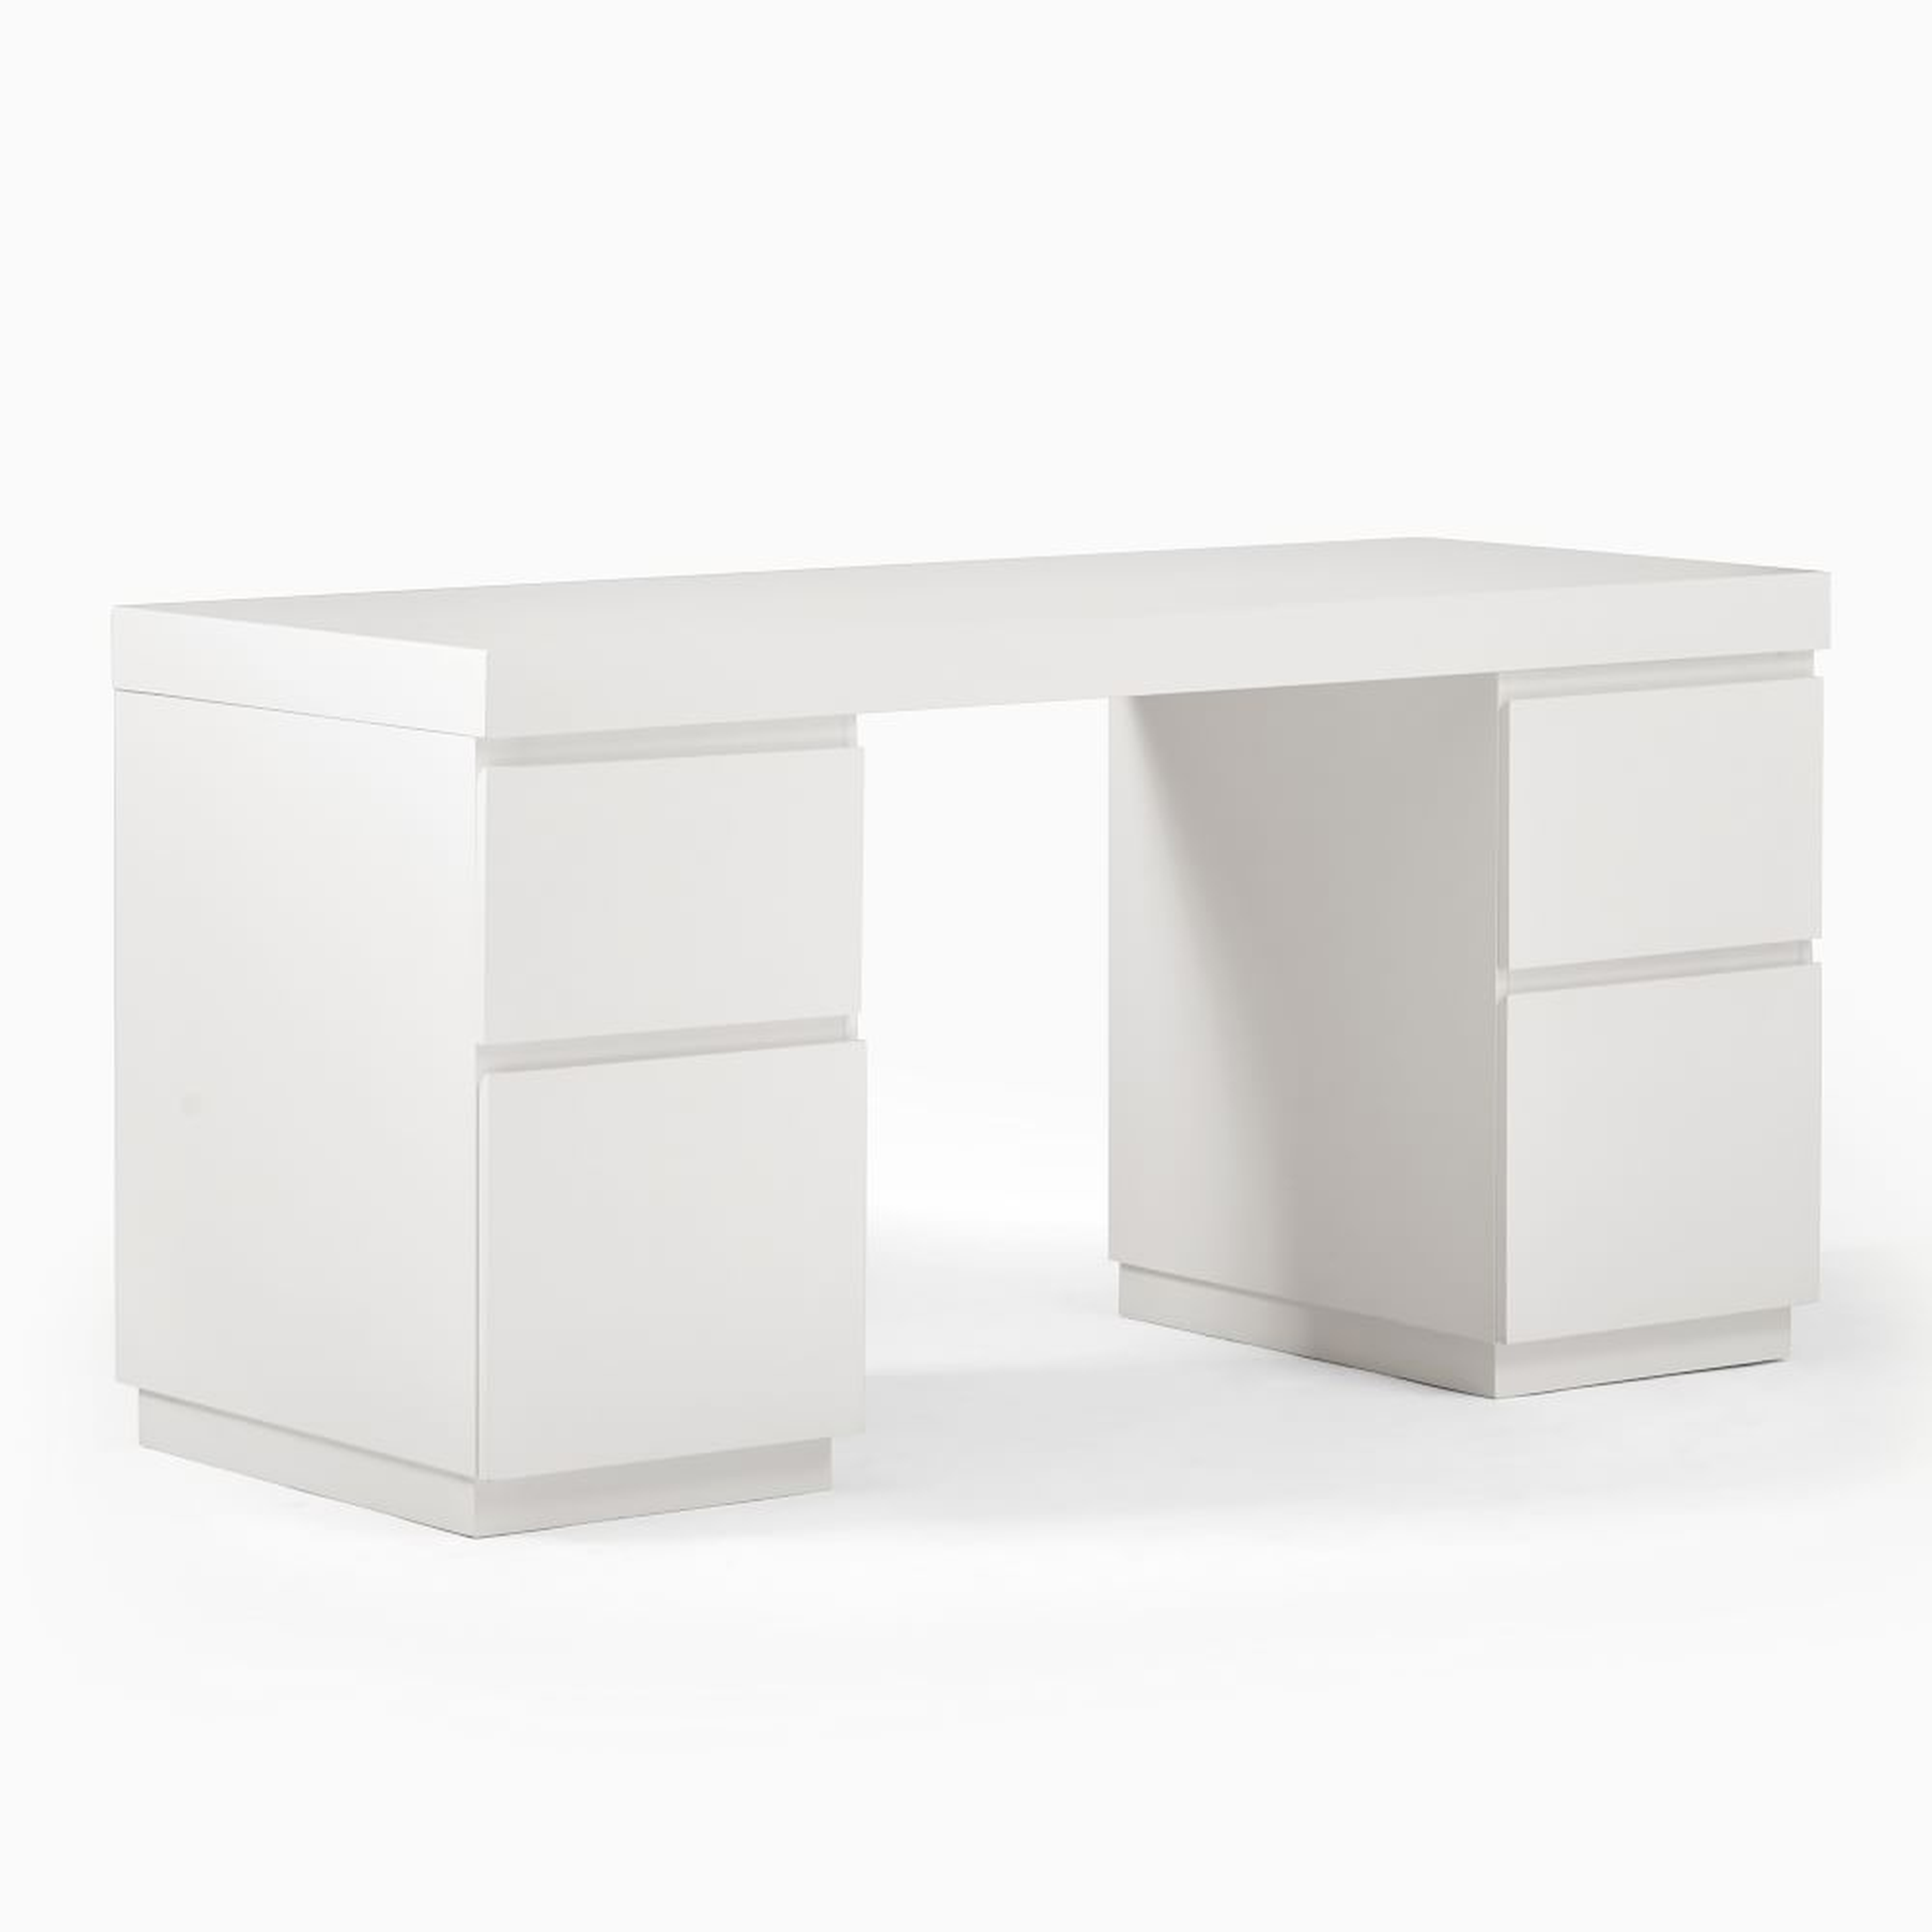 Parsons 2 File Cabinets + Desk Set, White - West Elm